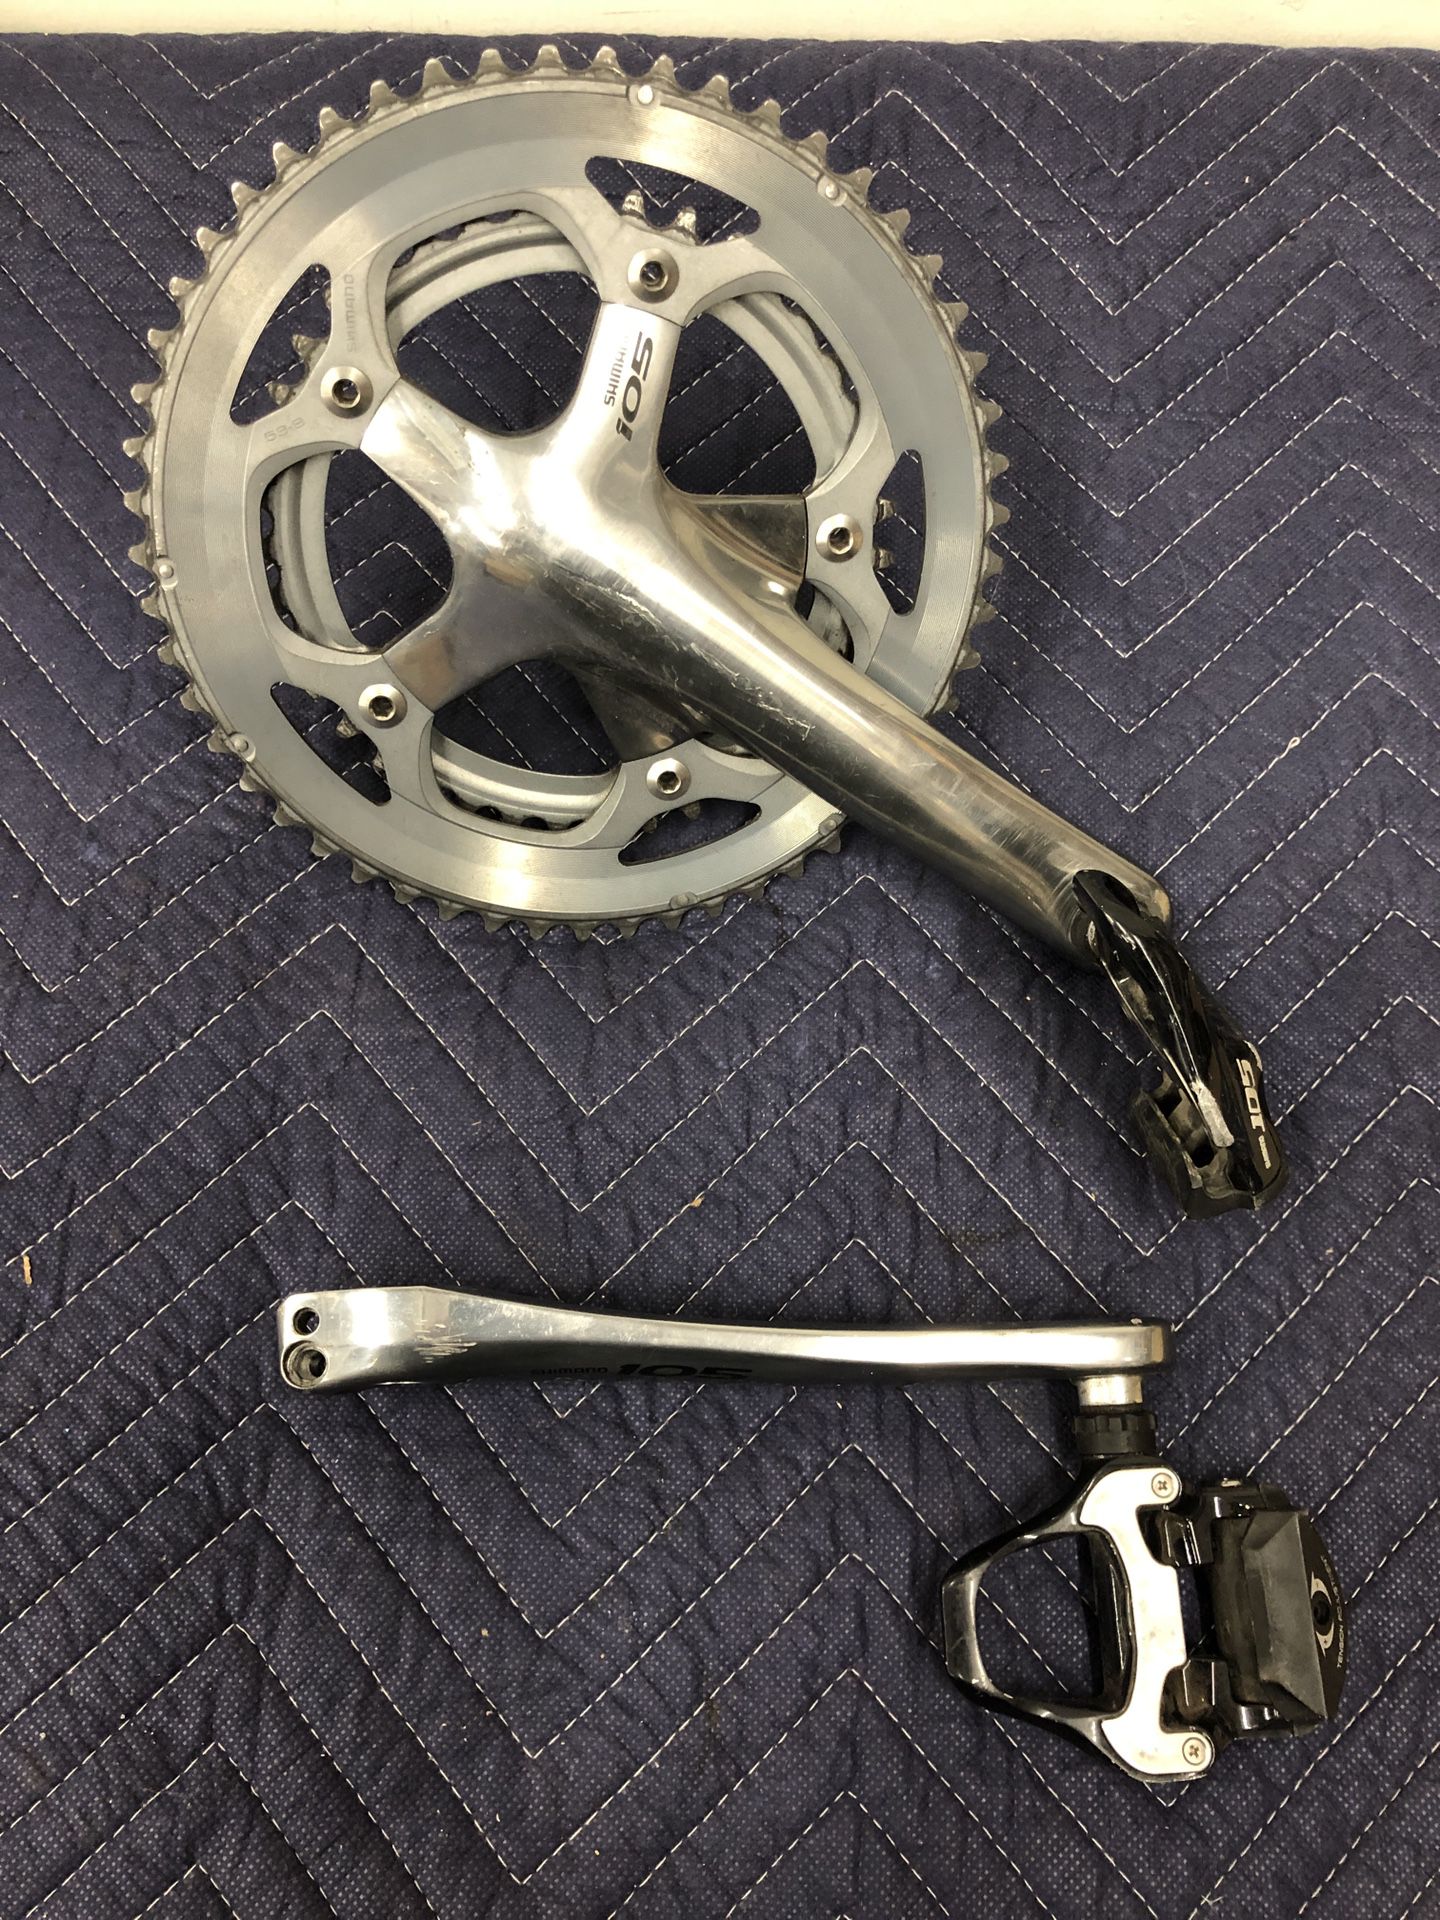 Shimano crankset and pedals